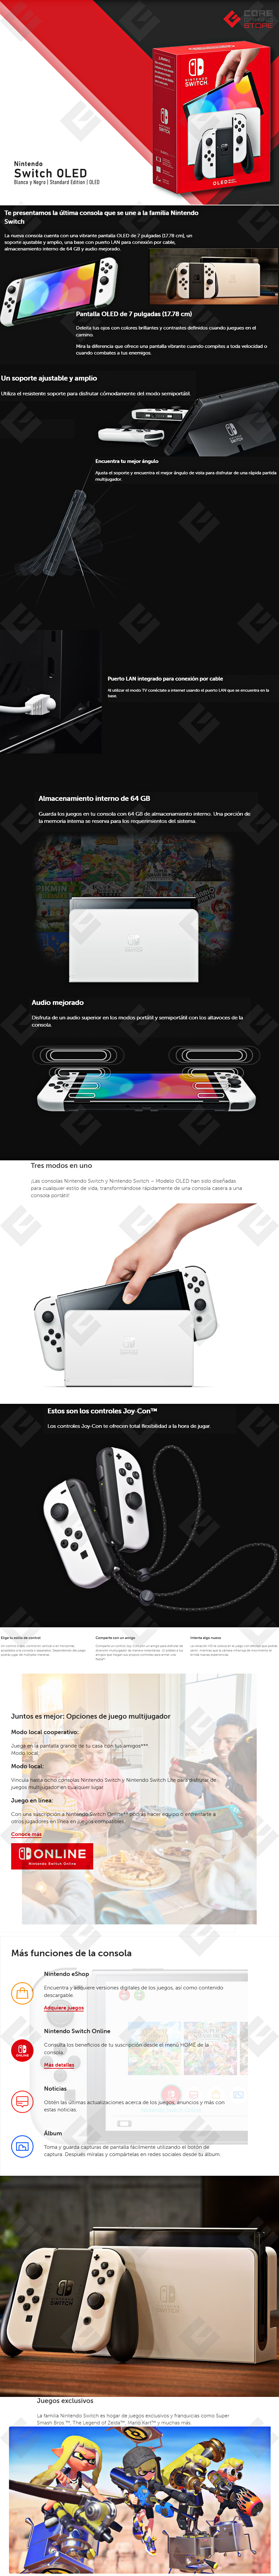 Consola Nintendo Switch modelo OLED 64GB + pantalla 7, blanco